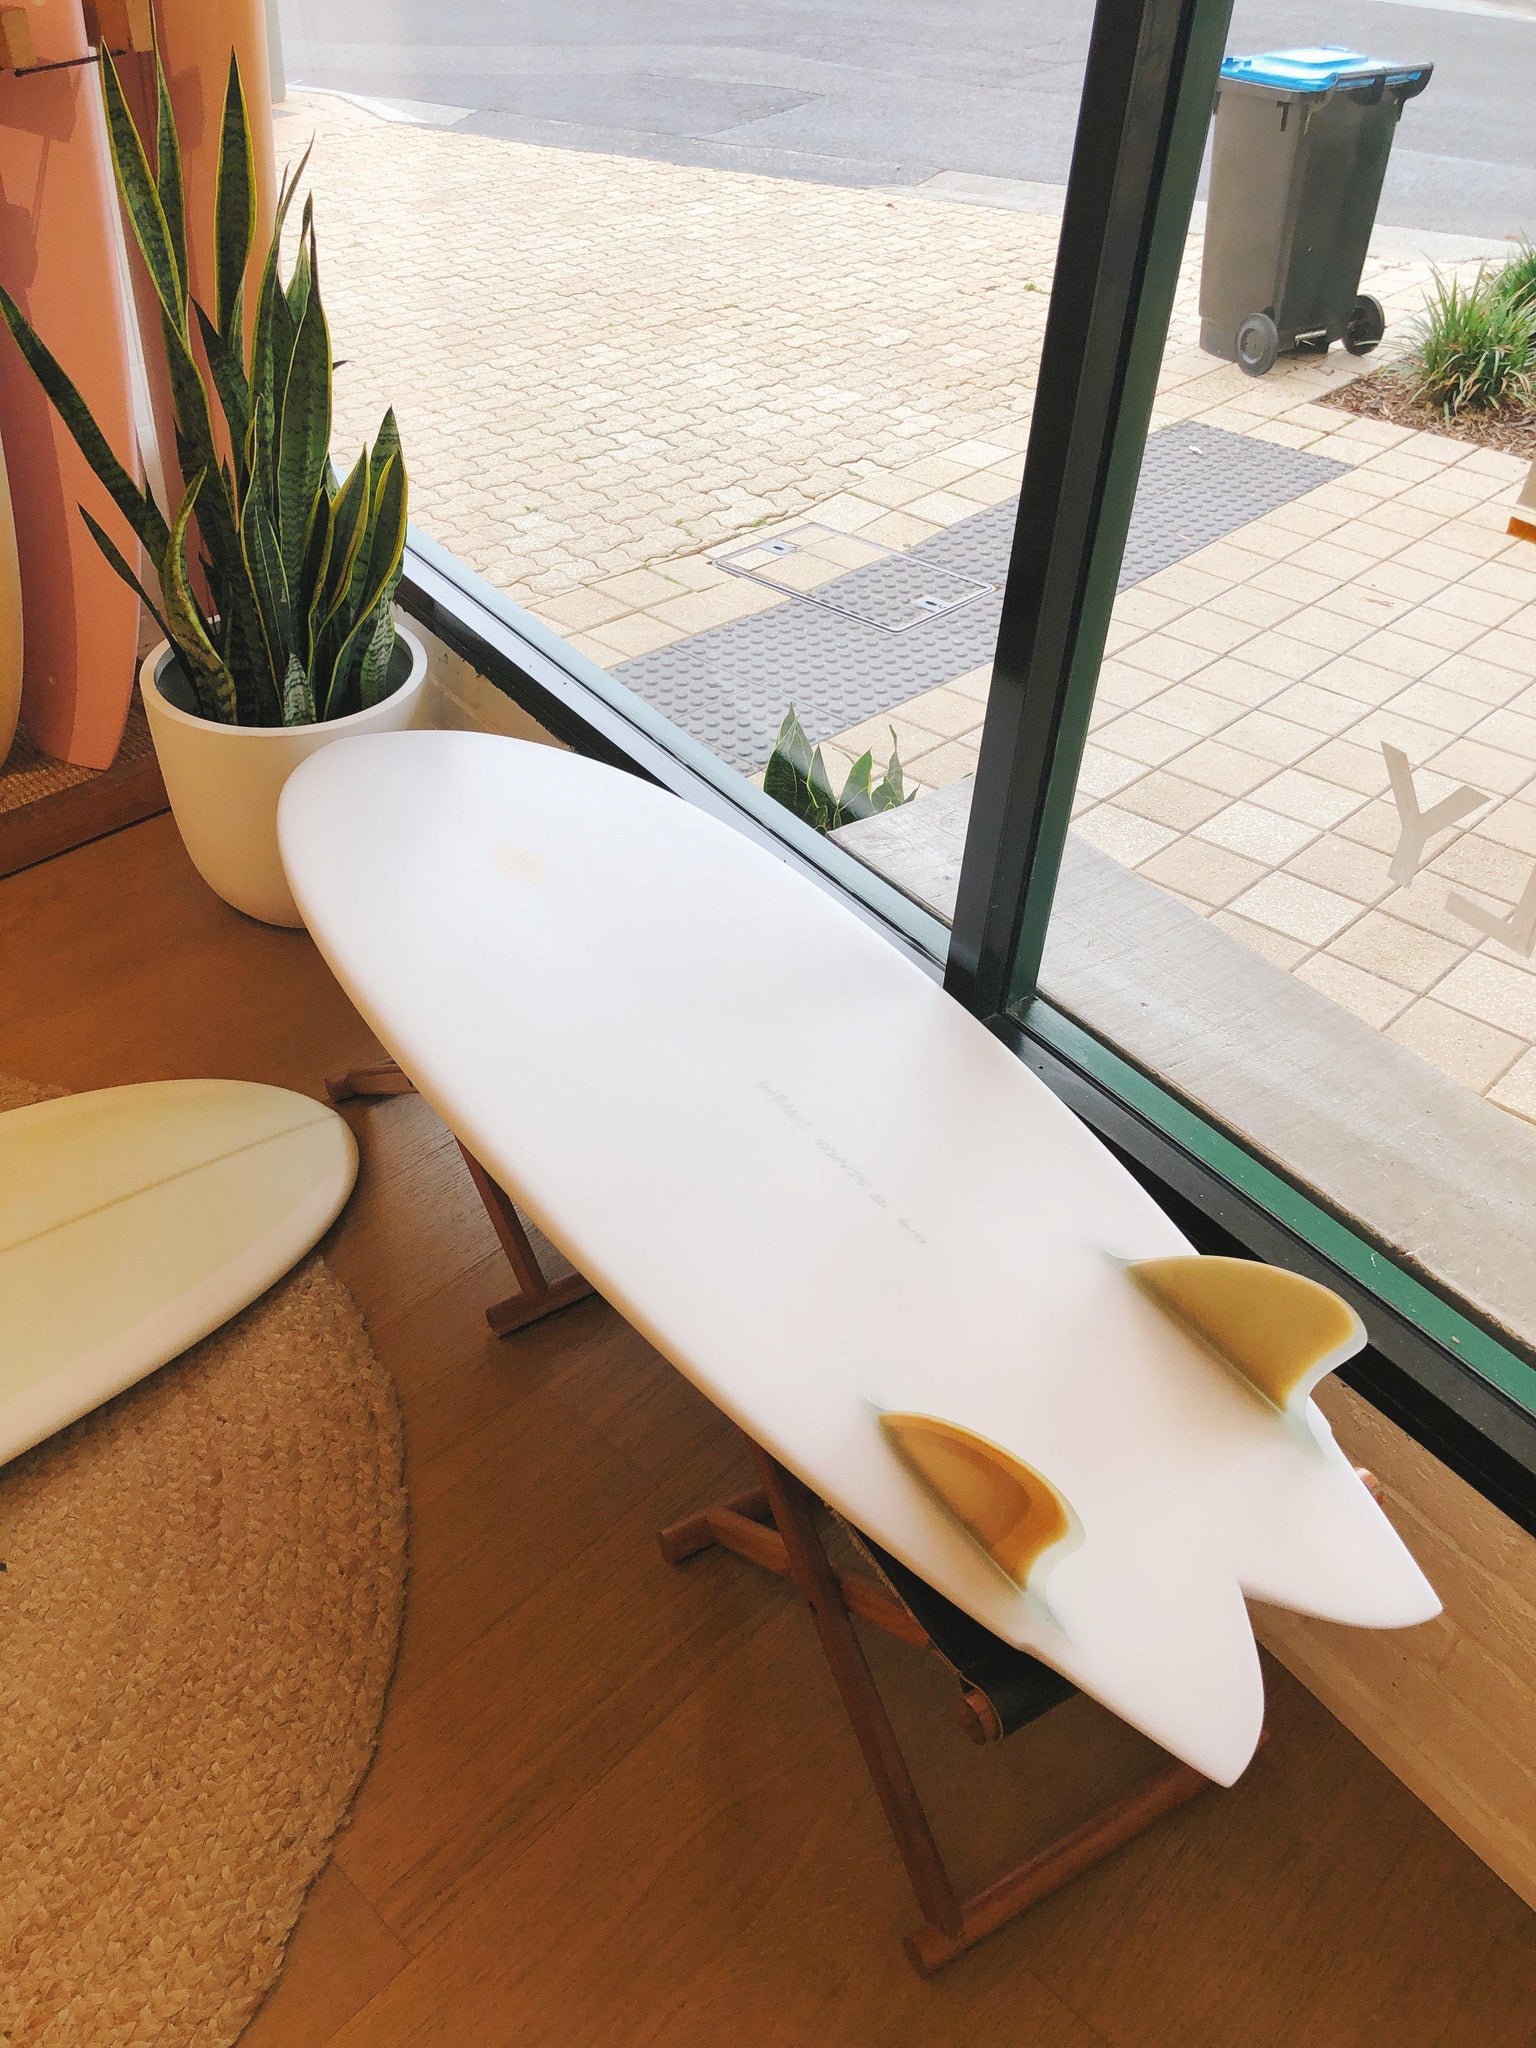 McTavish Phantom Limb 5'7"-Keel Surf & Supply